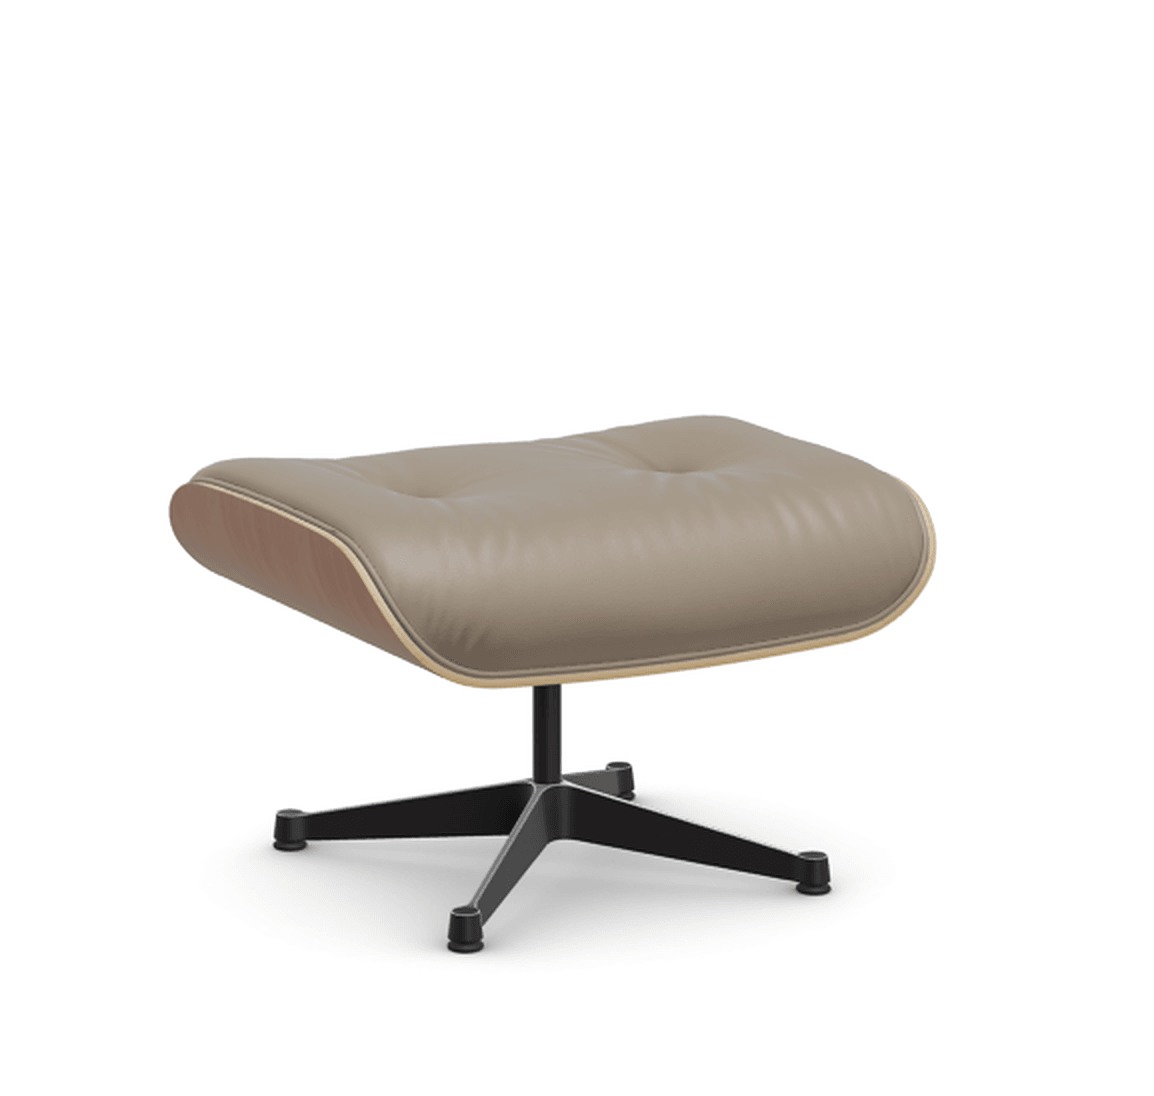 Vitra Lounge Chair Ottoman - 24 Amerikanischer Kirschbaum - Leder natural F 78 dark sand -  03/12 Aluminium poliert/tiefschwarz--19